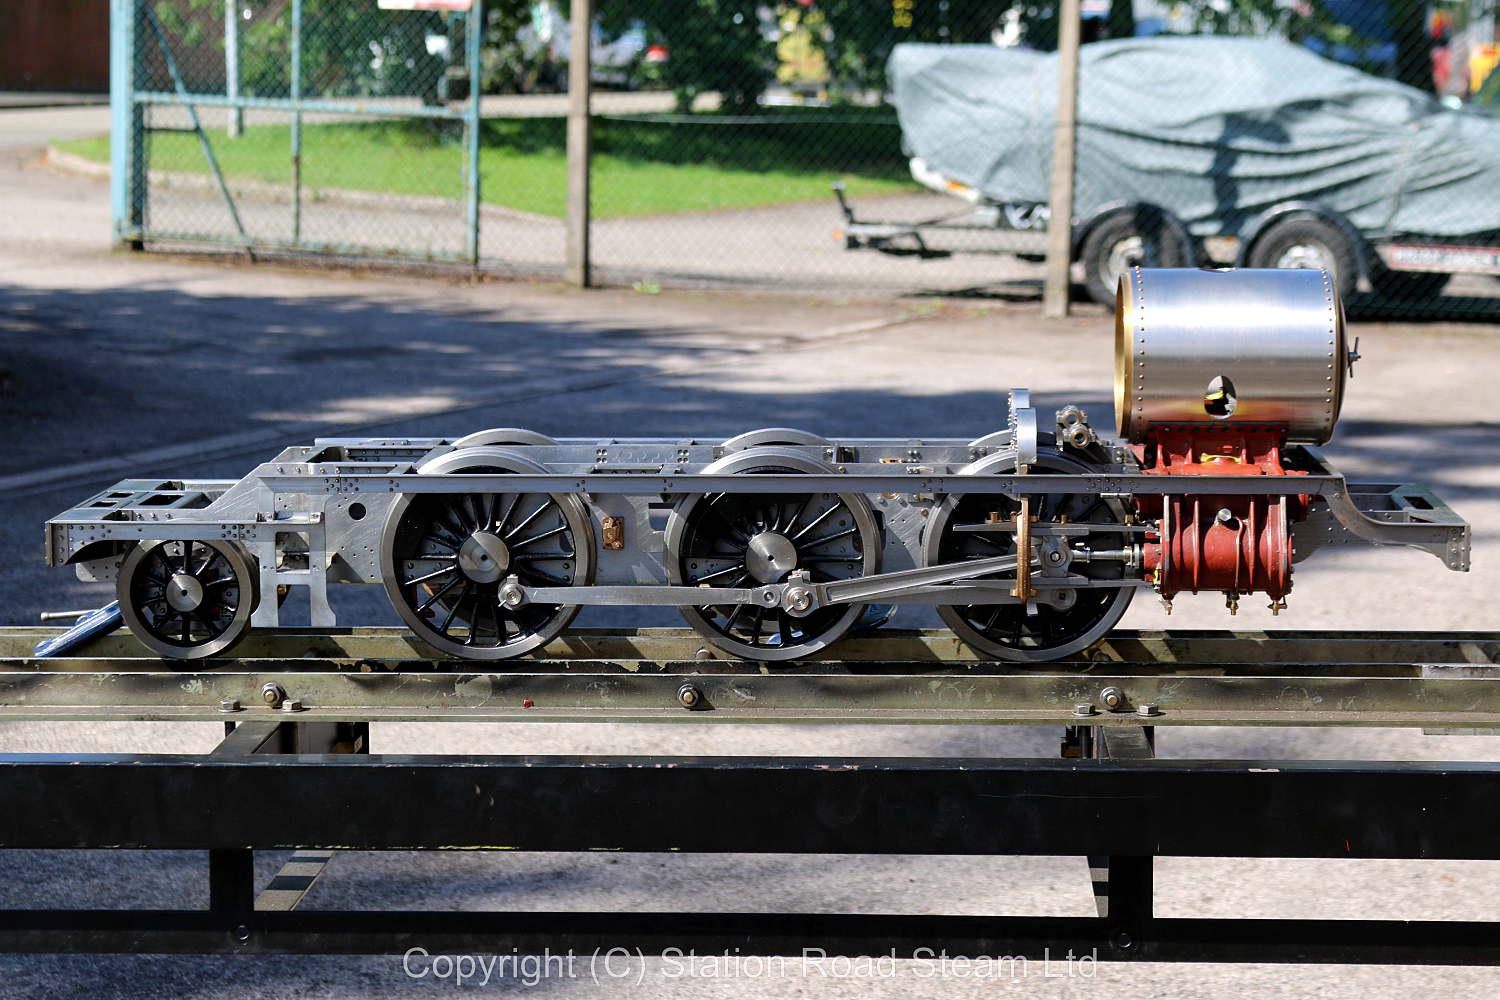 Part-built 5 inch gauge GWR 51XX